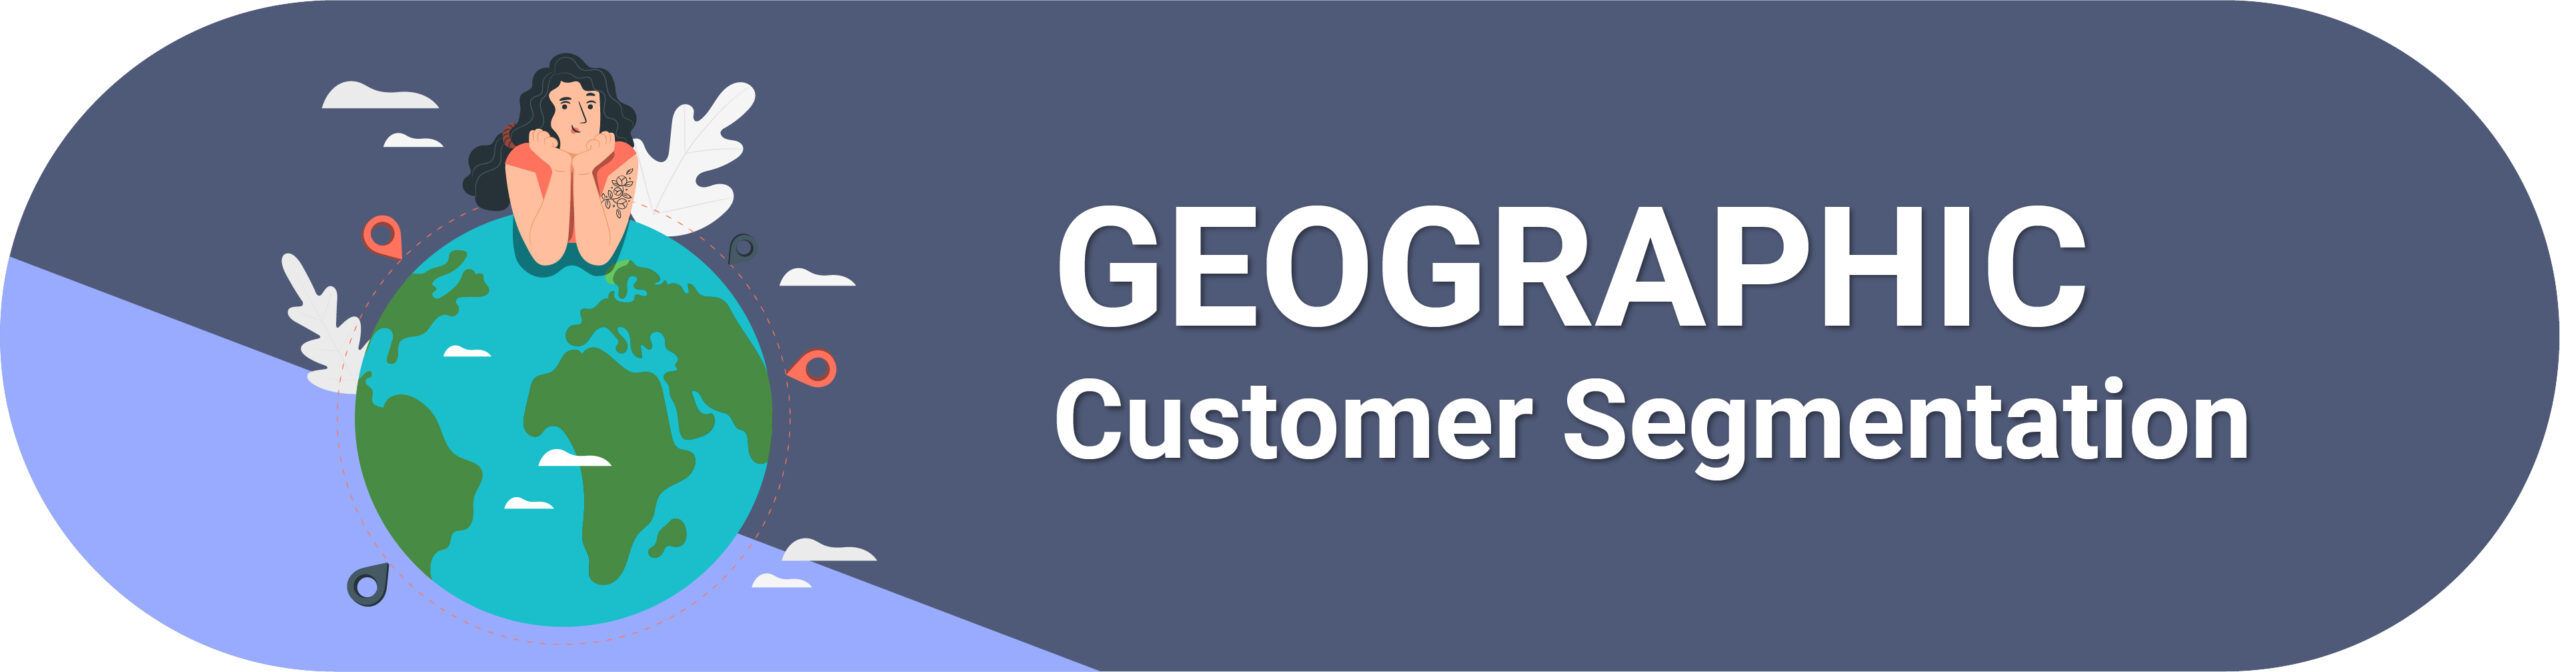 Geographic customer segmentation